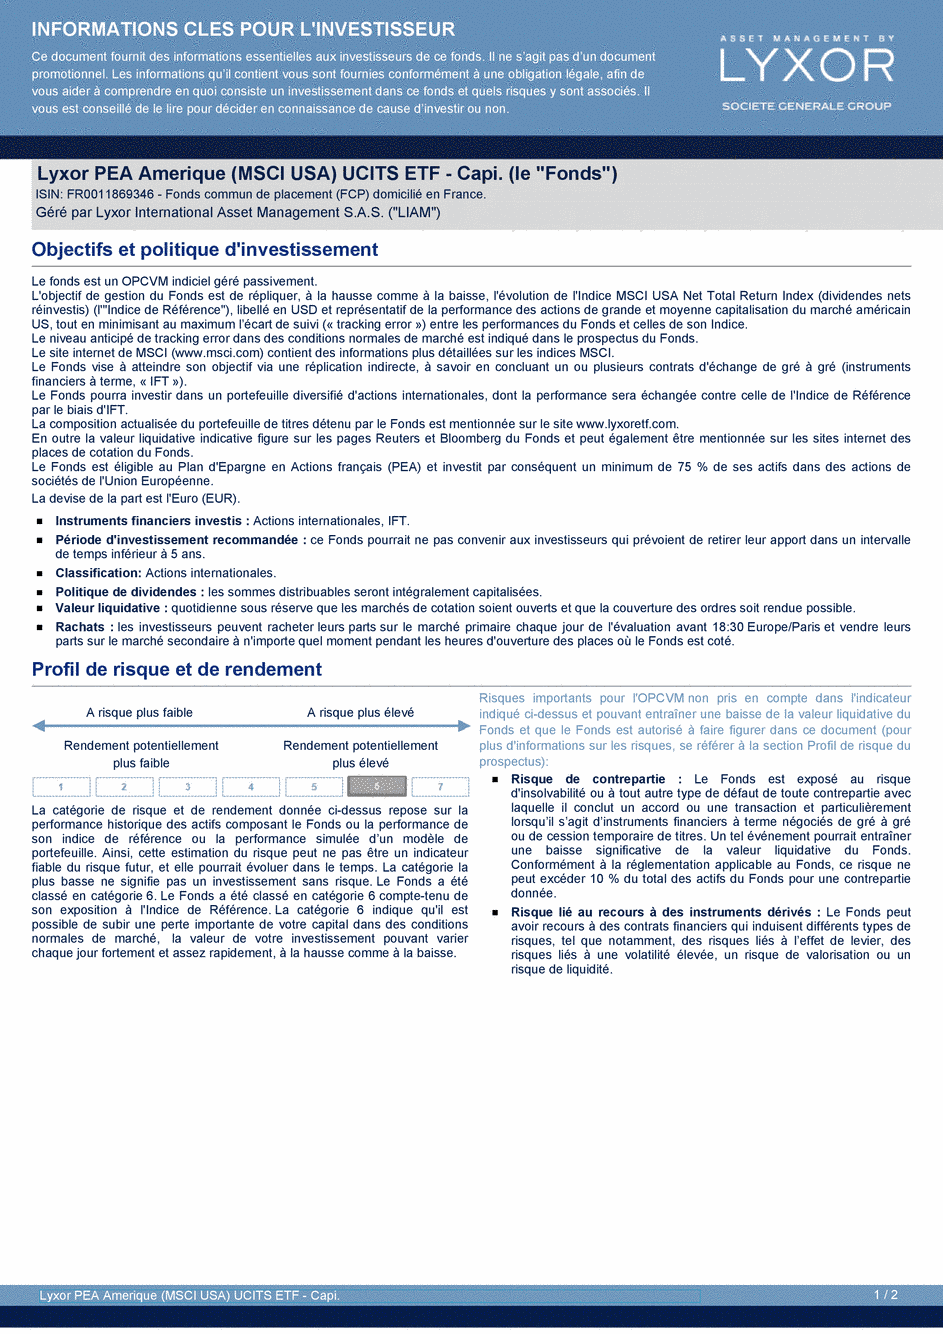 DICI Lyxor PEA Amerique (MSCI USA) UCITS ETF - Capi. - 21/07/2020 - Français